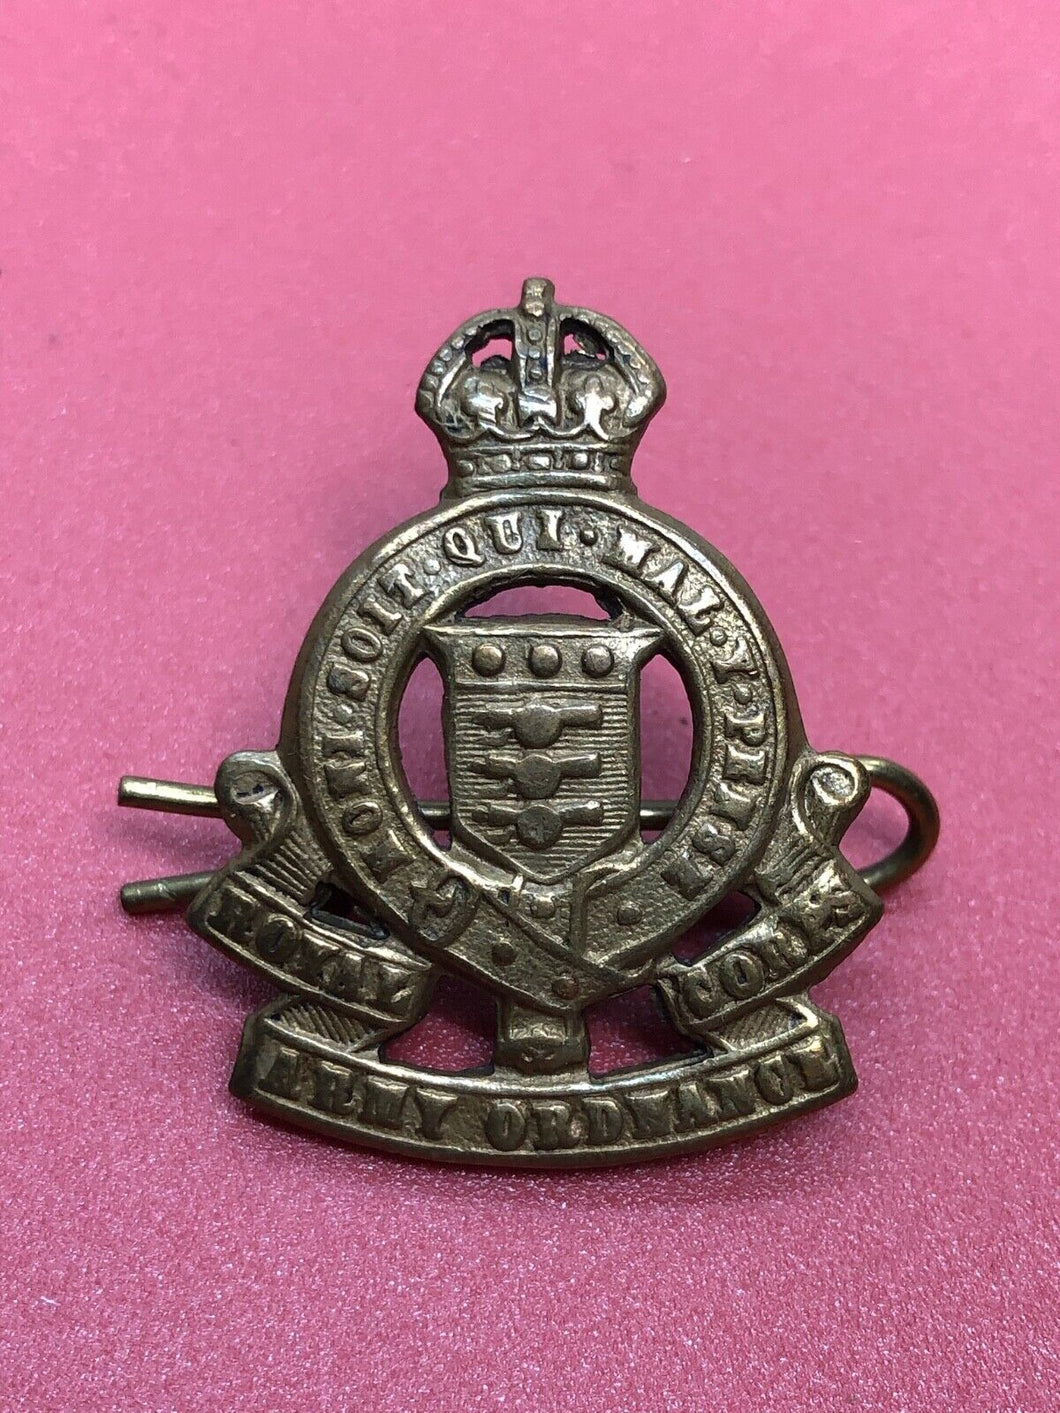 Original WW2 British Army Cap Badge - RAOC Royal Army Ordinance Corps